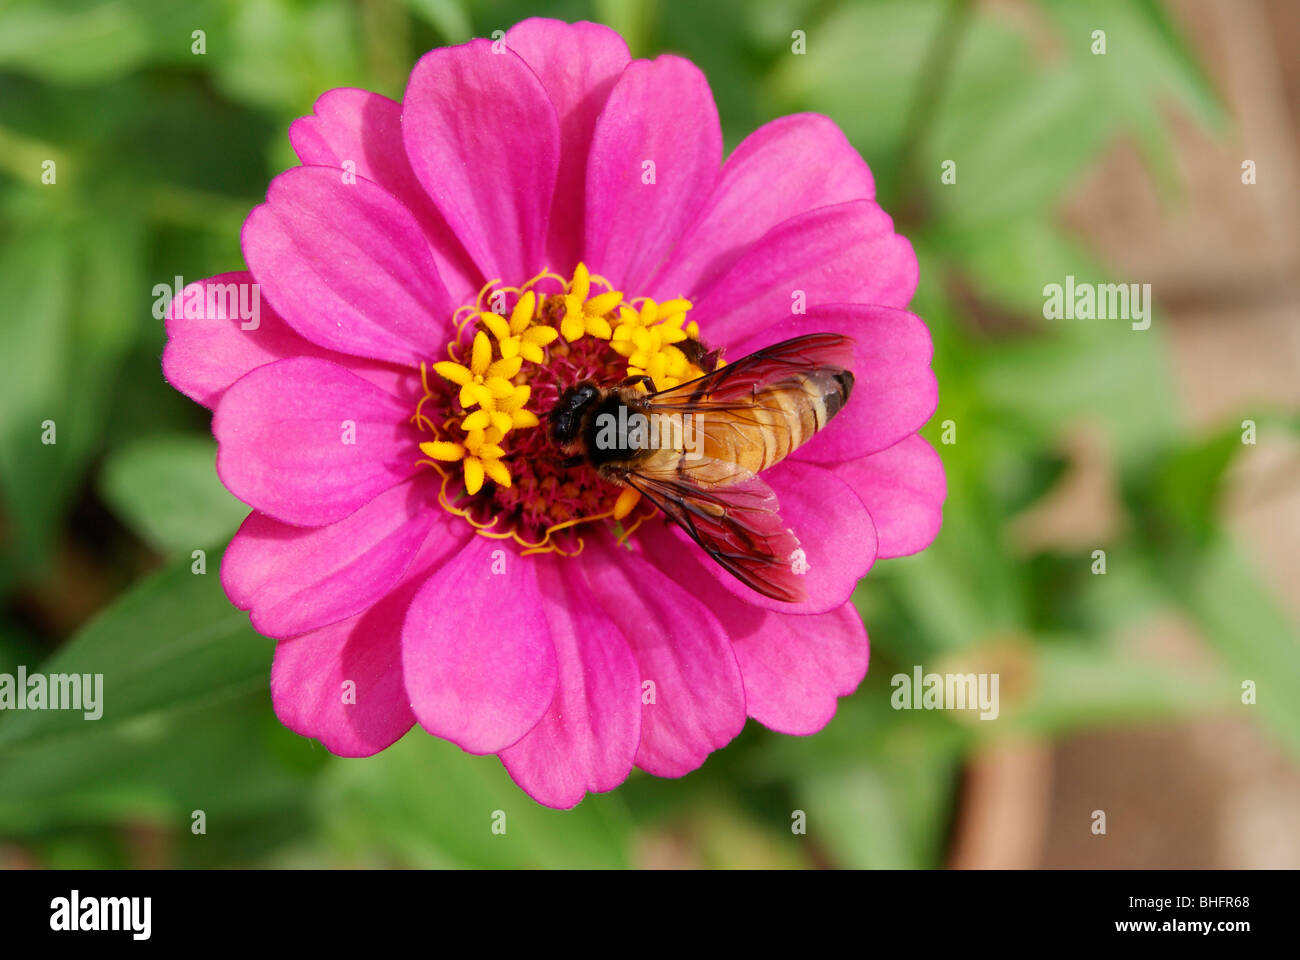 HoneyBee in a cute violet dahlia Flower.Pollination of Flowers via Honeybee.A Scene from Kerala,India Stock Photo